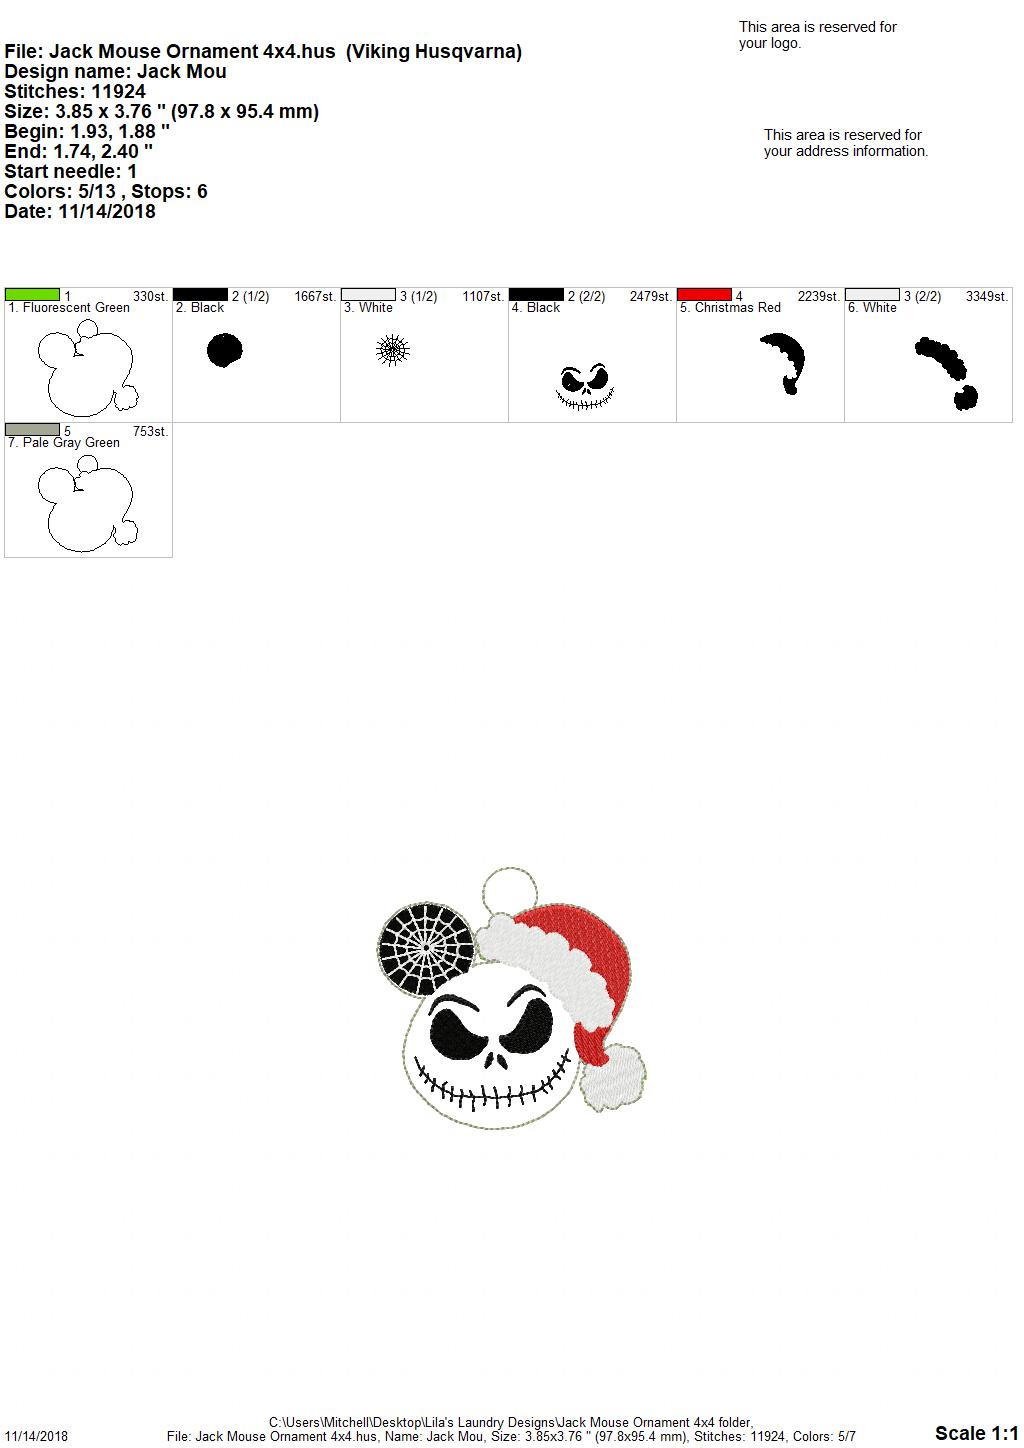 Jack Mouse Ornament - Digital Embroidery Design